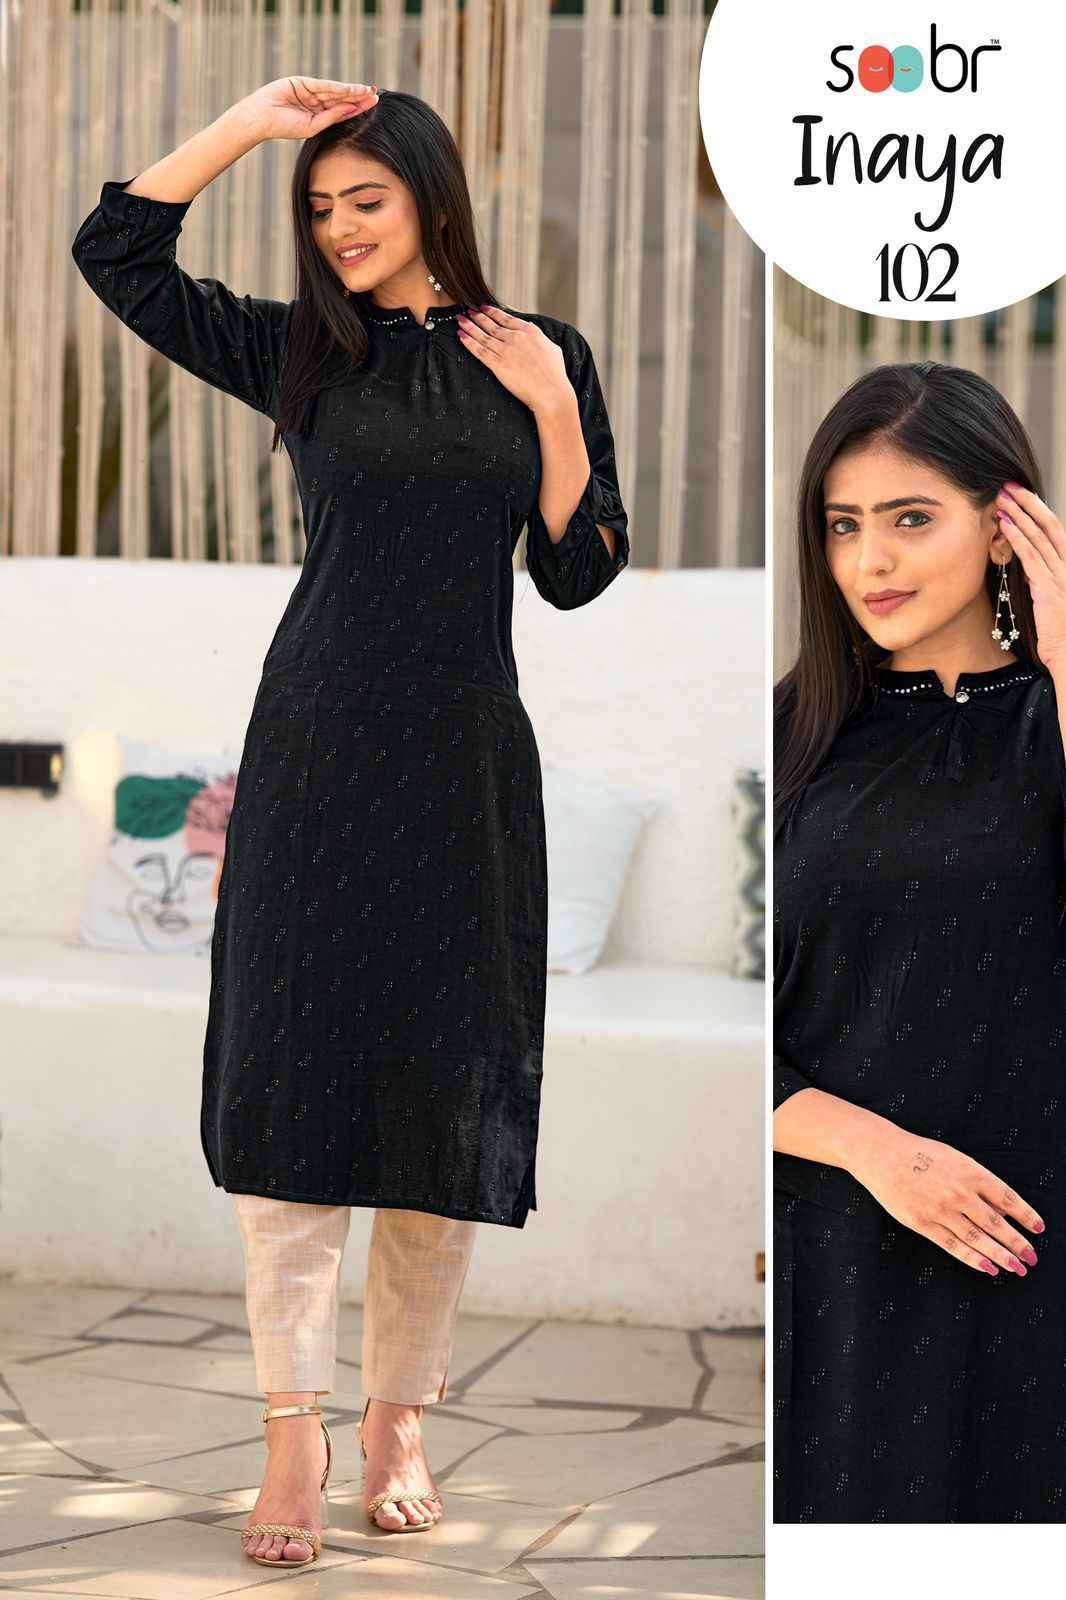 soobr inaya pure jacquard casual wear stylish kurti exporter new pattern 3 2023 03 30 14 12 55